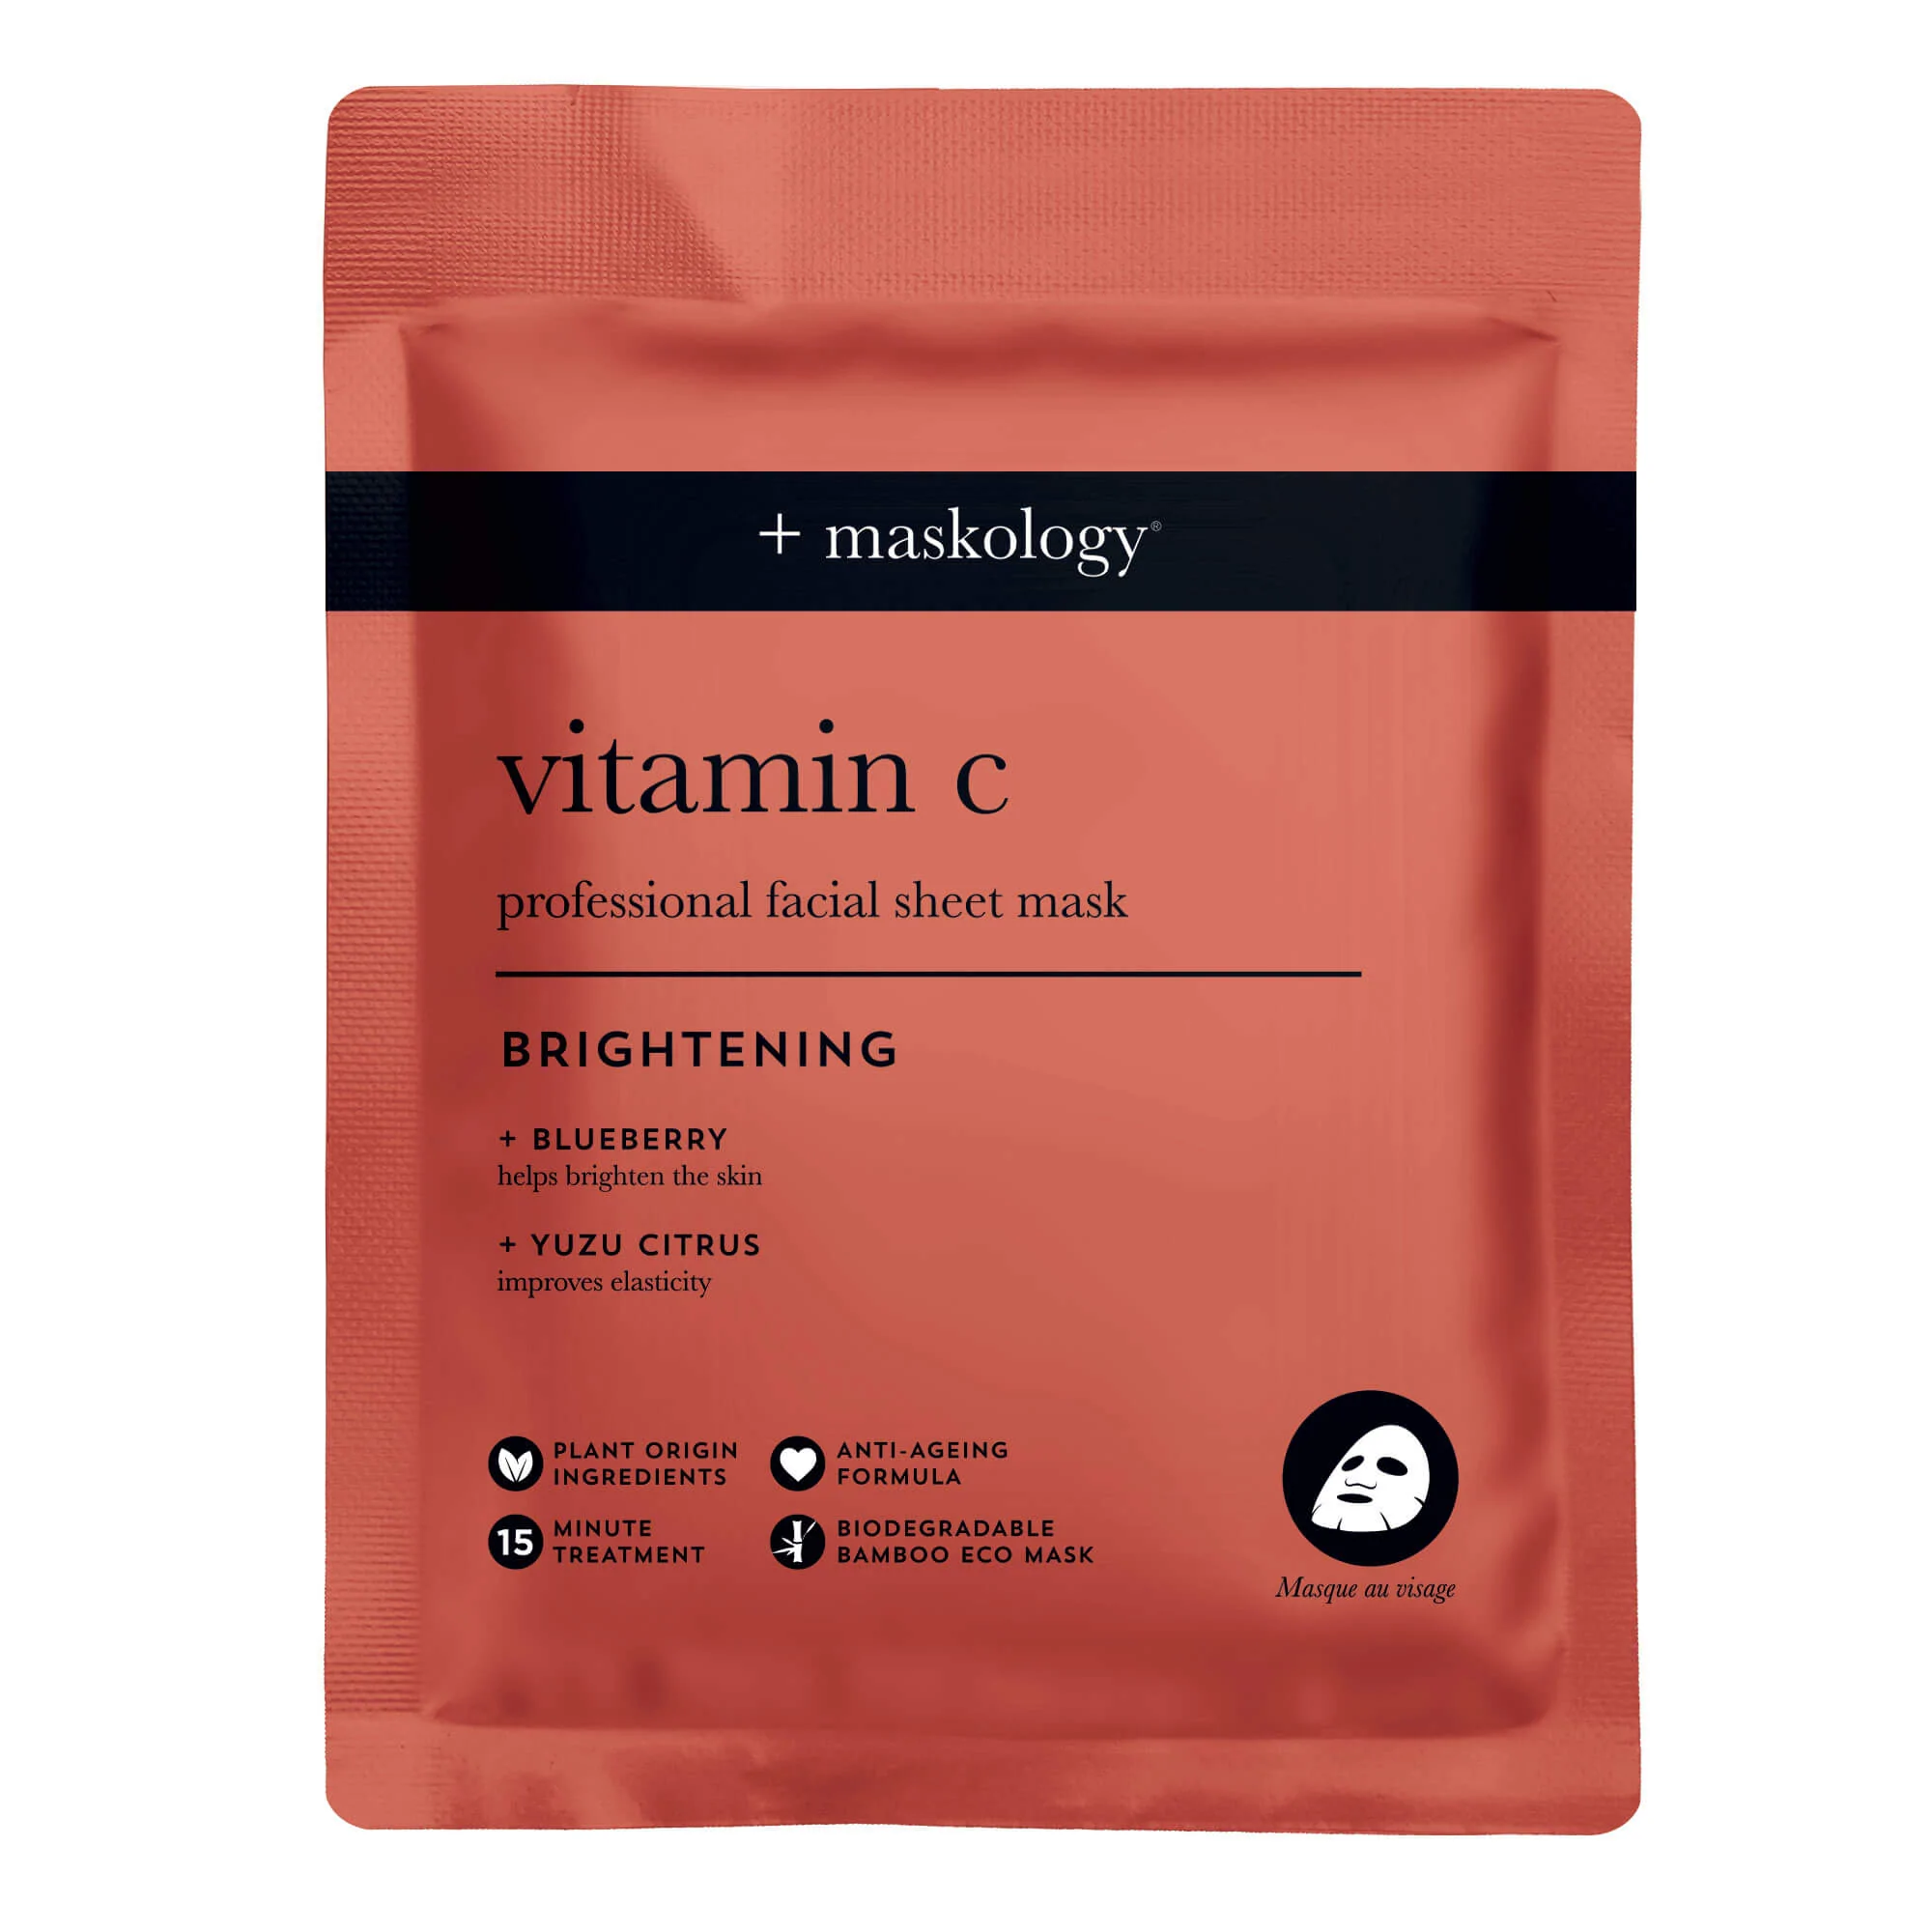 Maskology Vitamin C – Professional Facial Sheet Mask